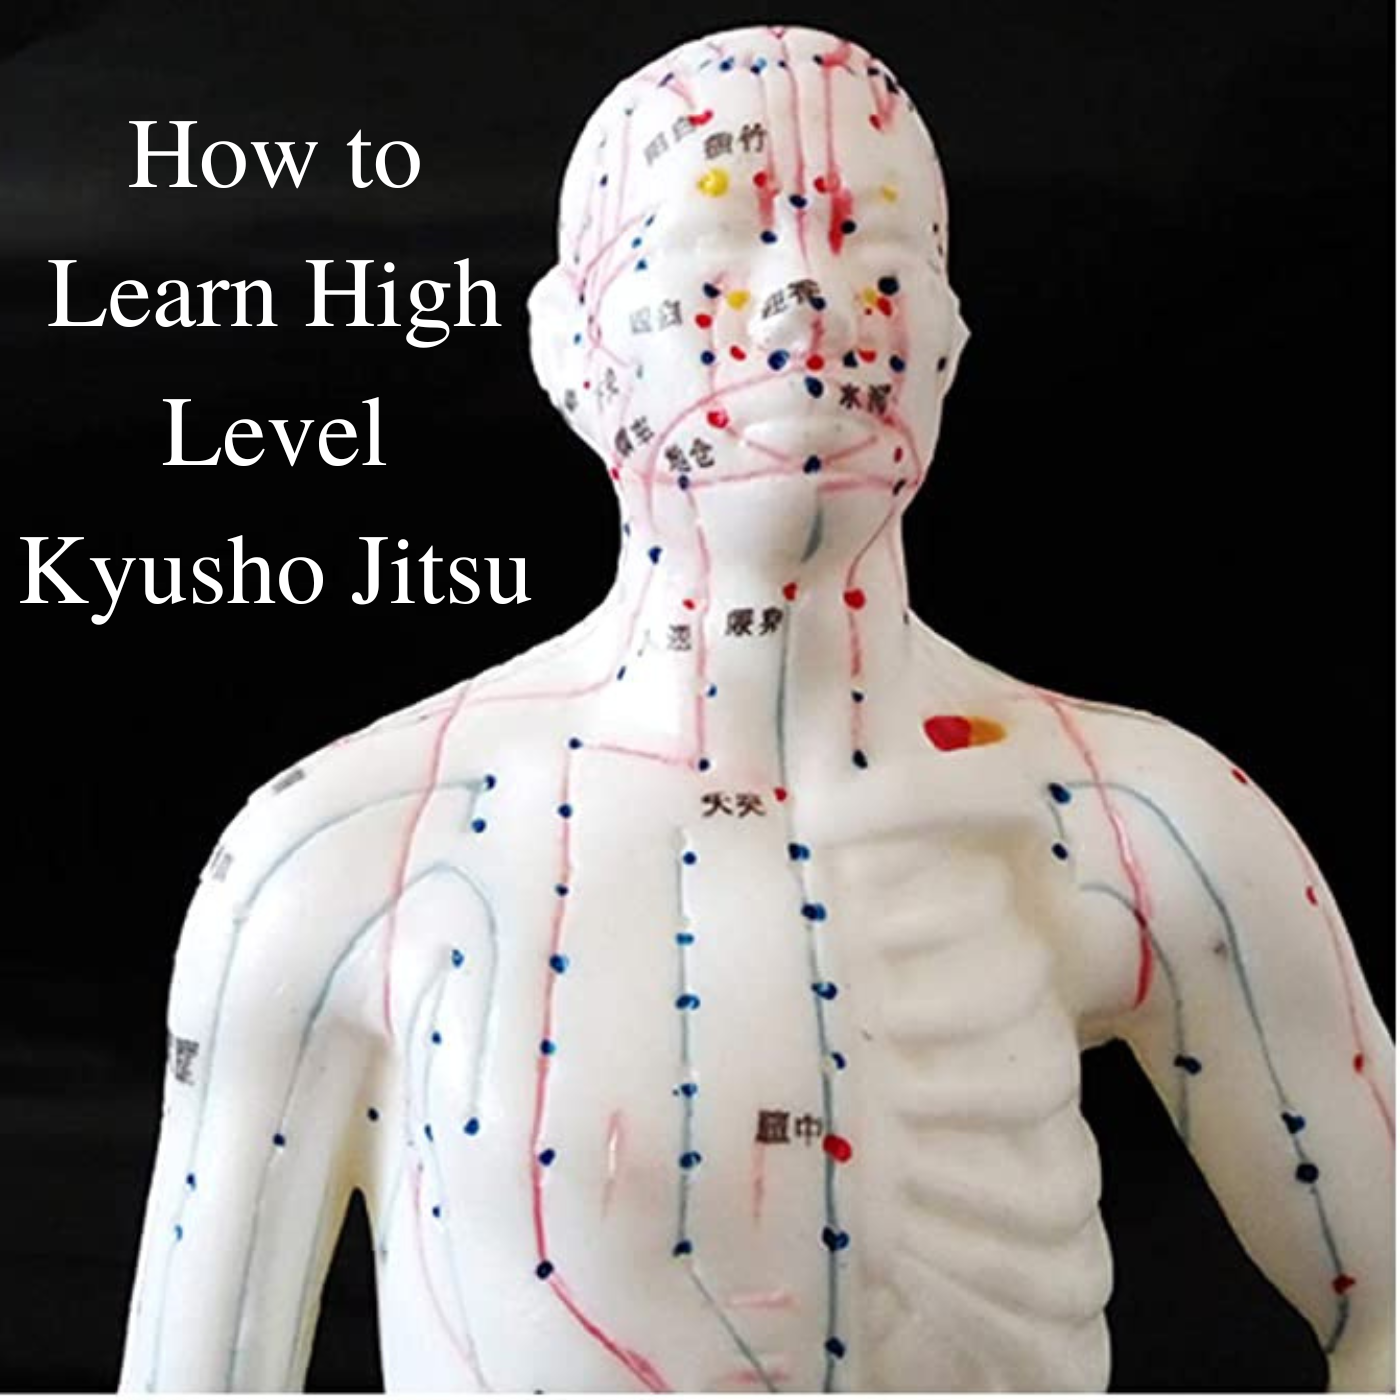 How to Learn High Level Kyusho Jitsu